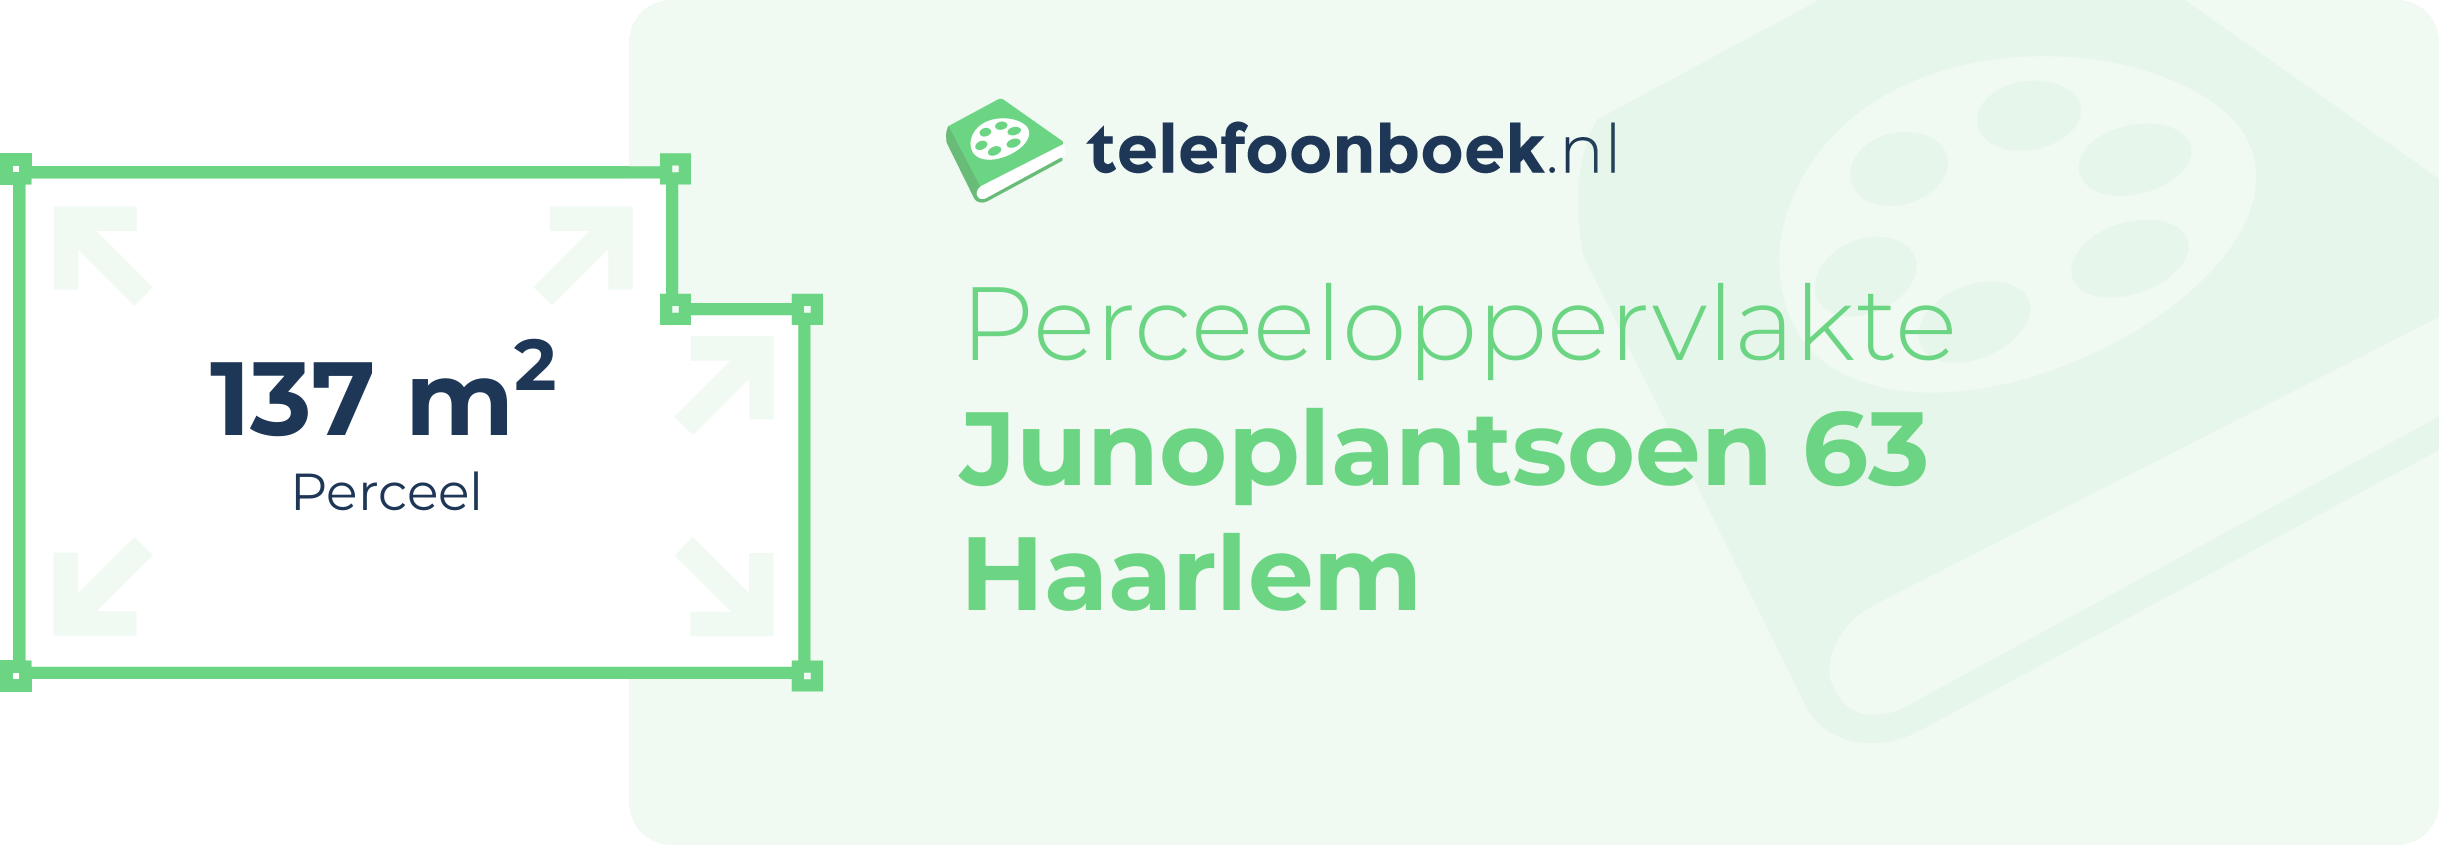 Perceeloppervlakte Junoplantsoen 63 Haarlem